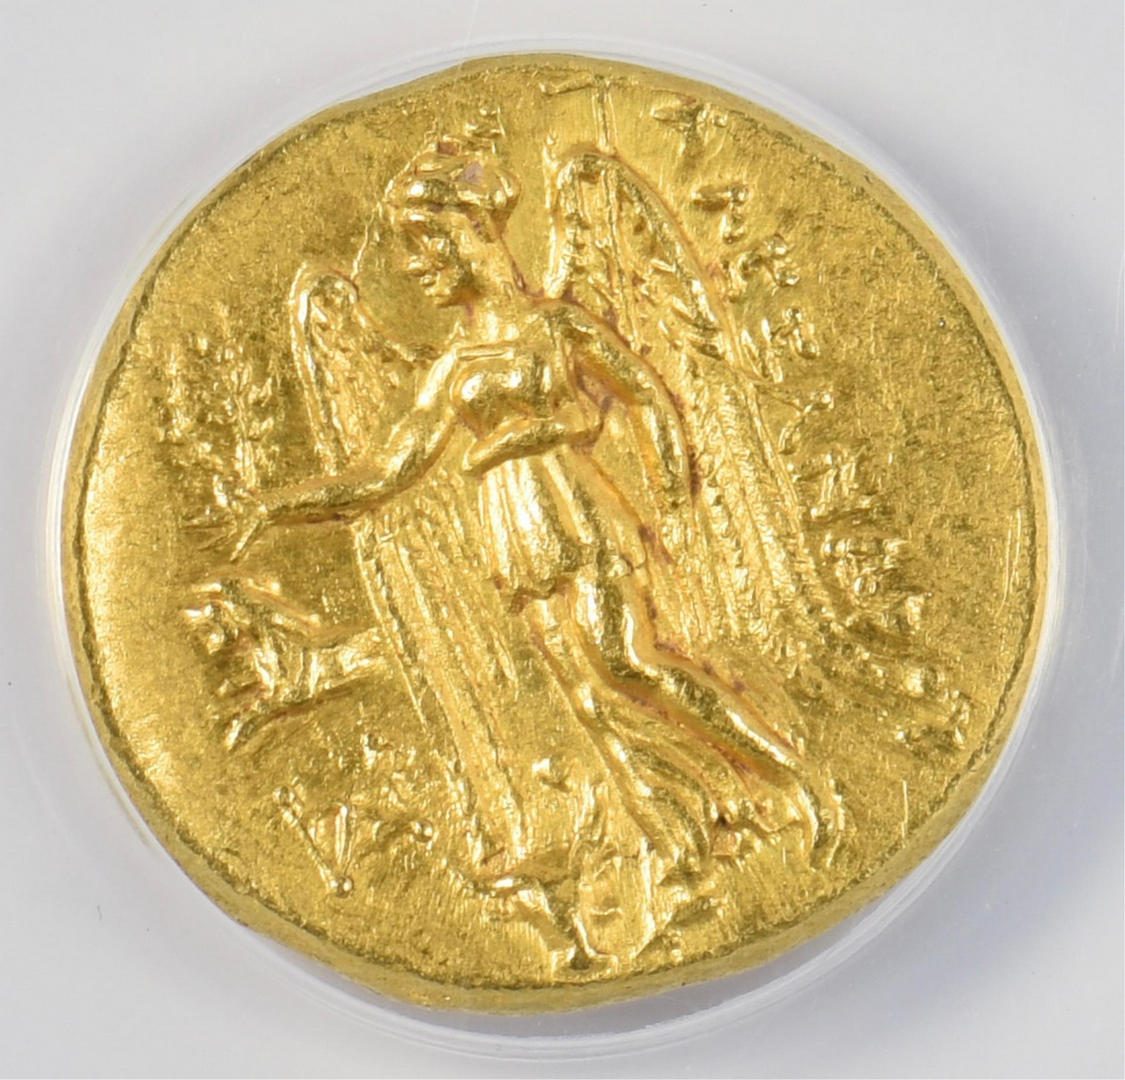 Lot 332: Alexander the Great AV Stater Coin, Sestos Mint